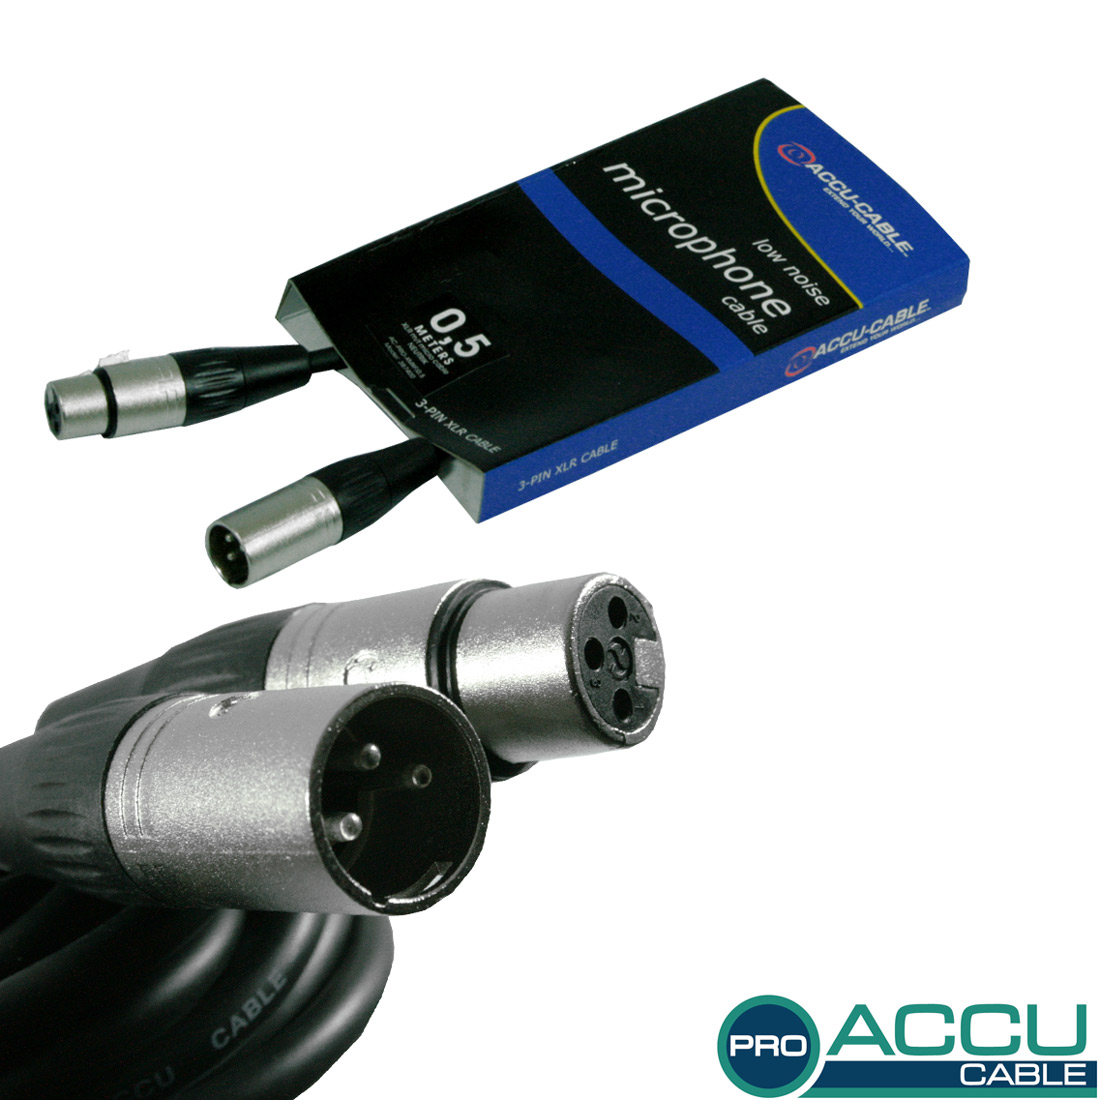 Accu Cable AC-PRO-XMXF/0,5 XLRm/f 0,5m